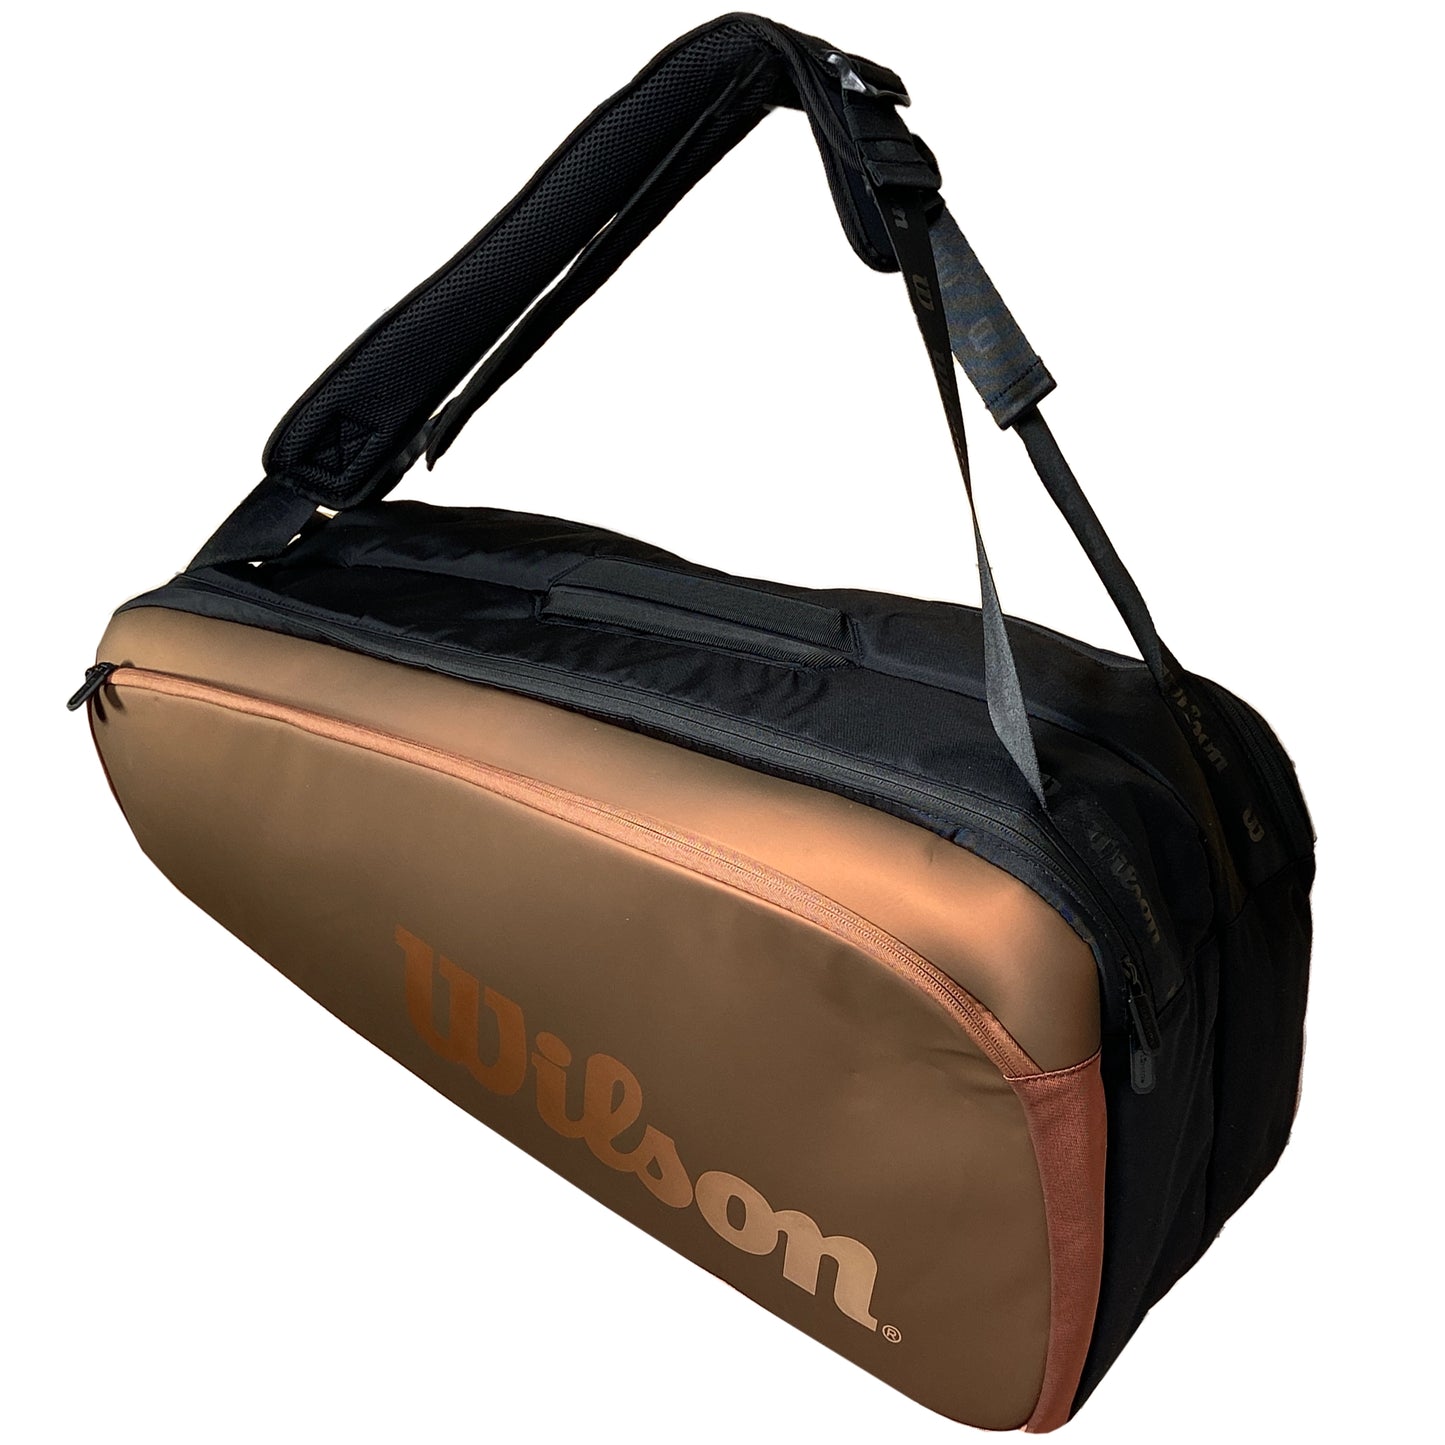 Wilson Super Tour Pro Staff Bag V14 9PK (WR8024501)